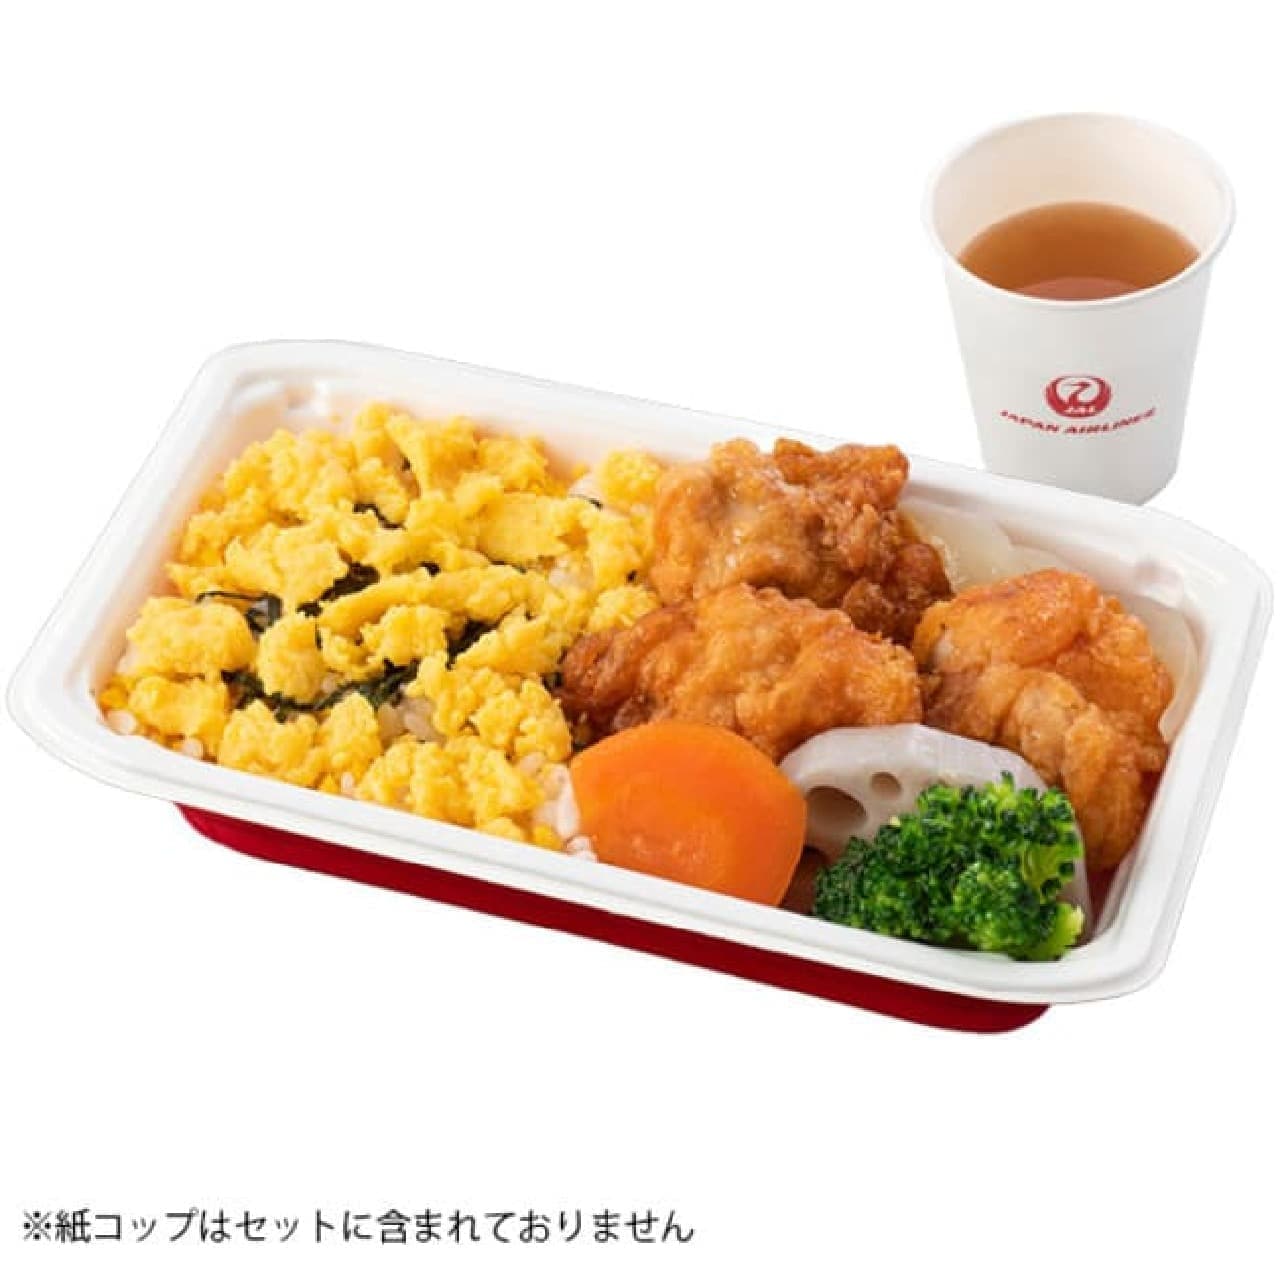 JAL in-flight meal "BISTRO de SKY" to be sold at AEON Net Super